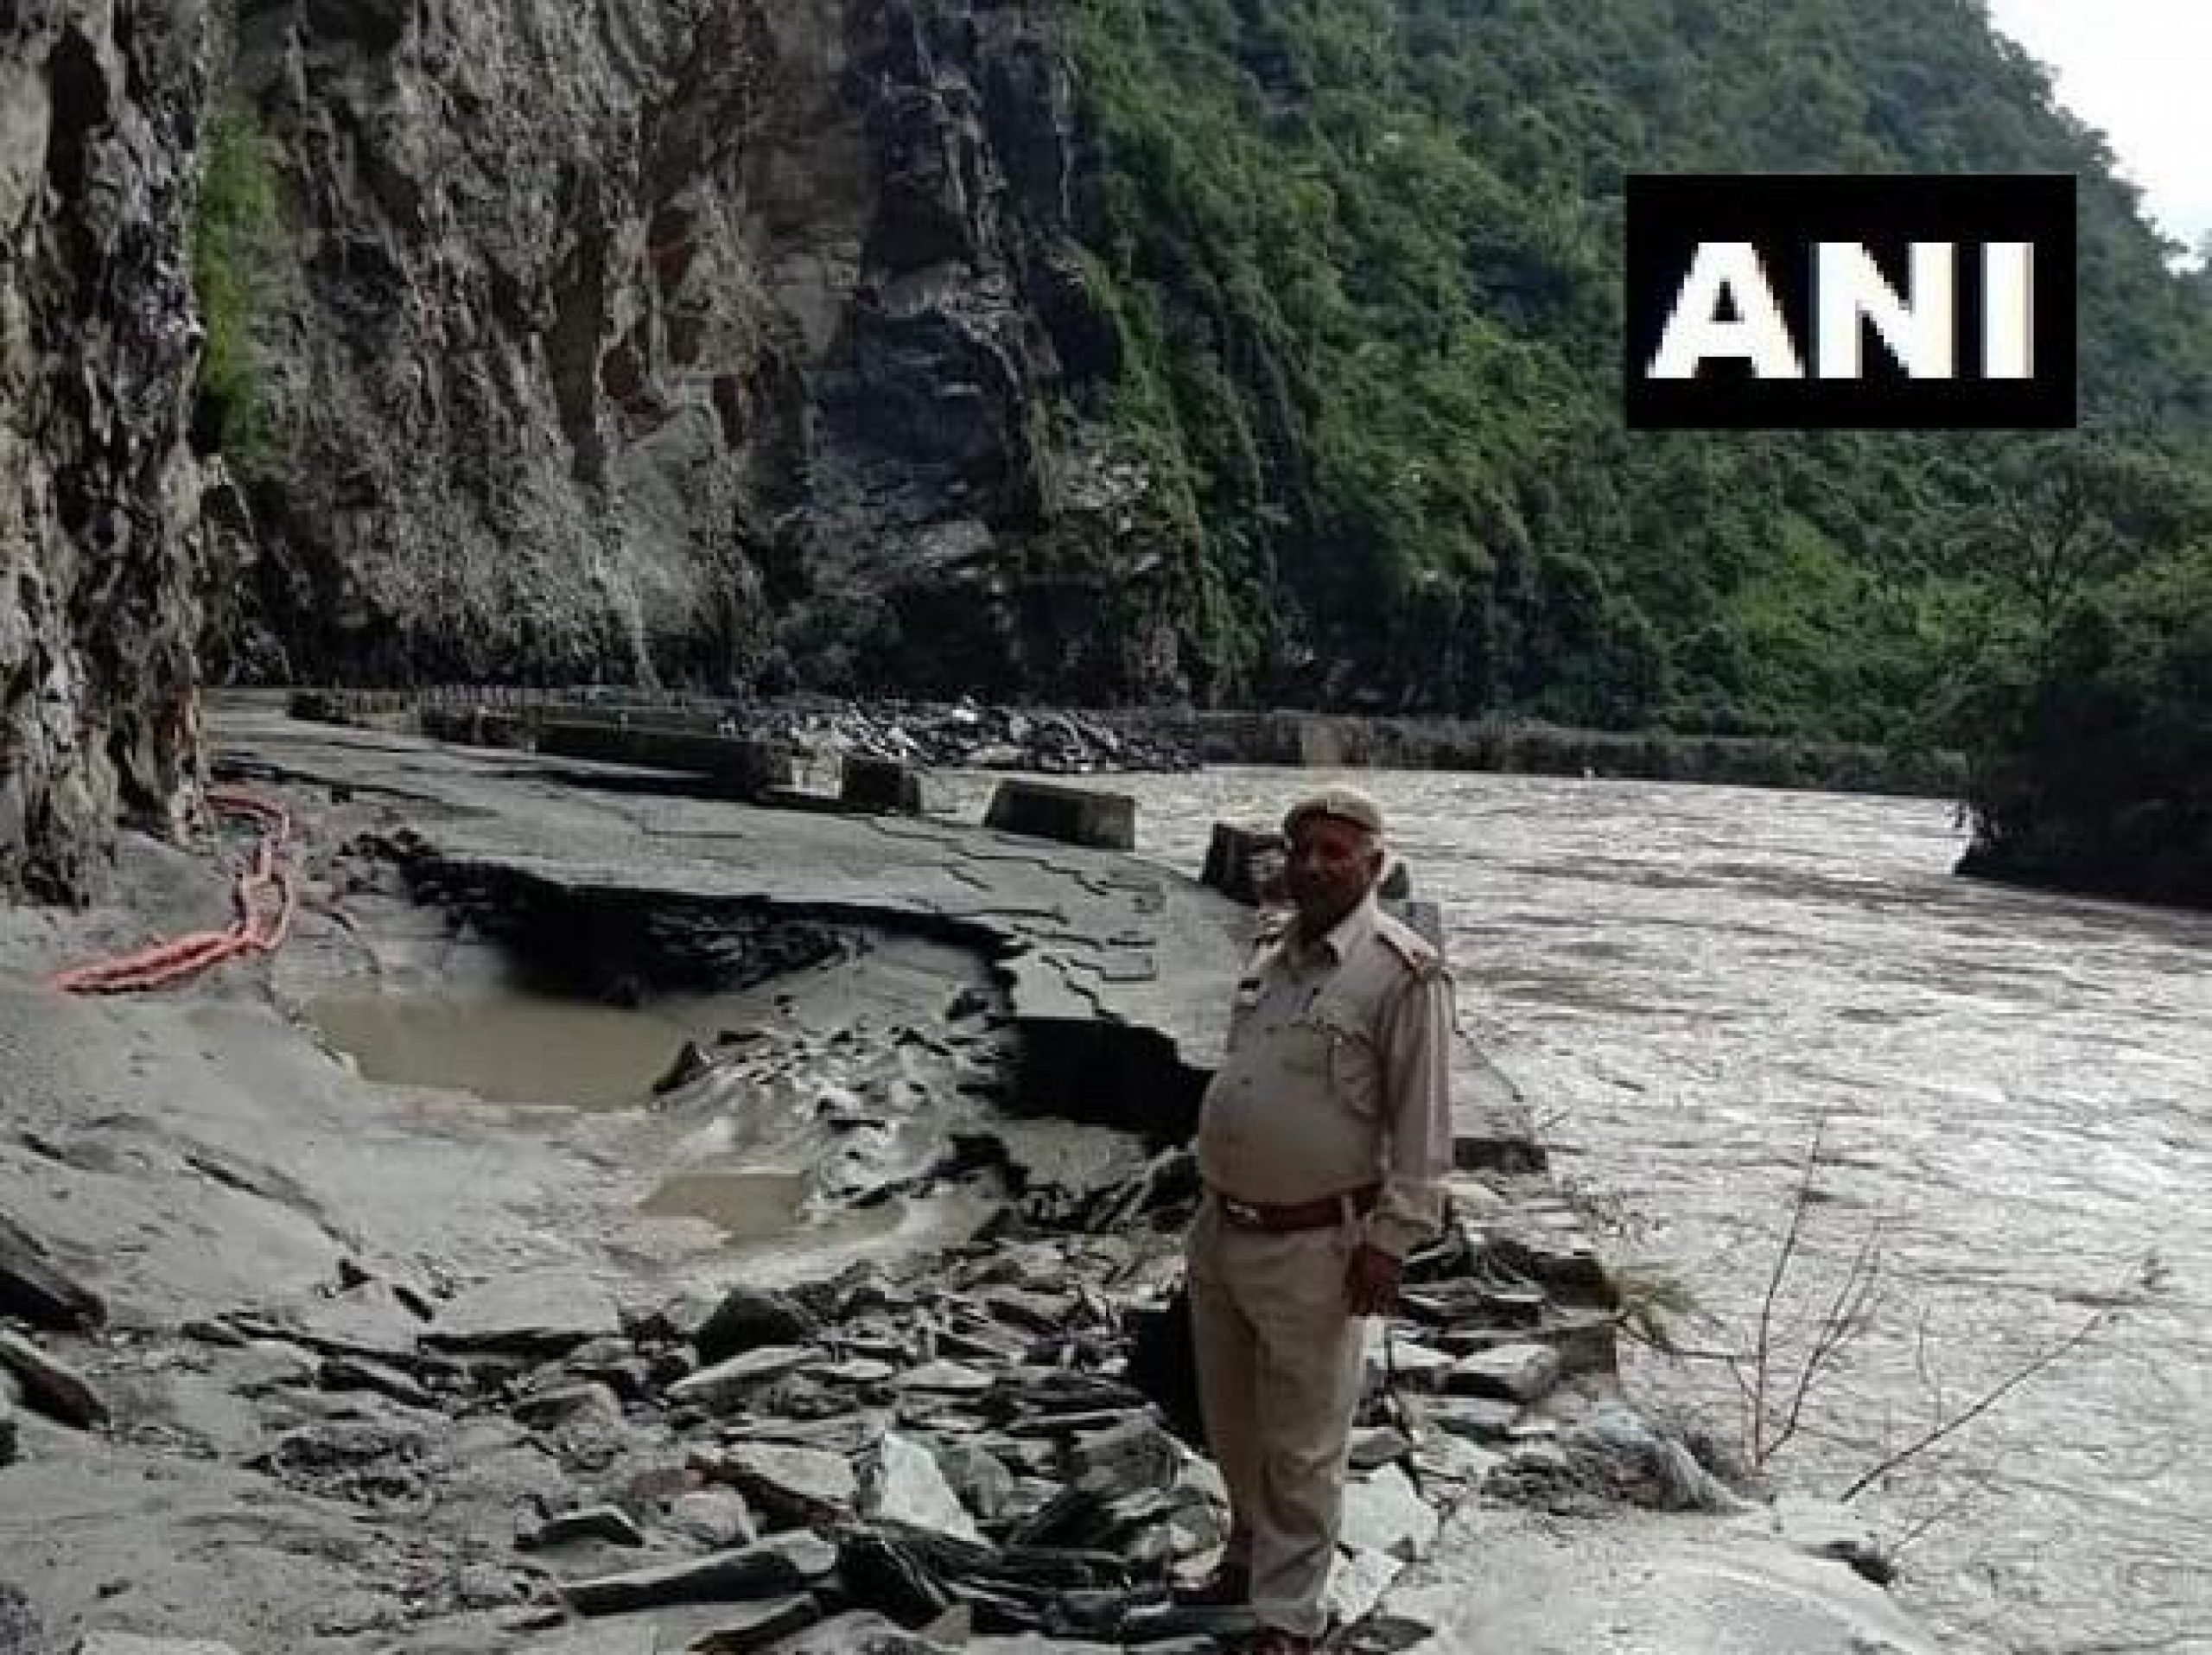 218 dead this monsoon season in rain-ravaged Himachal: State govt